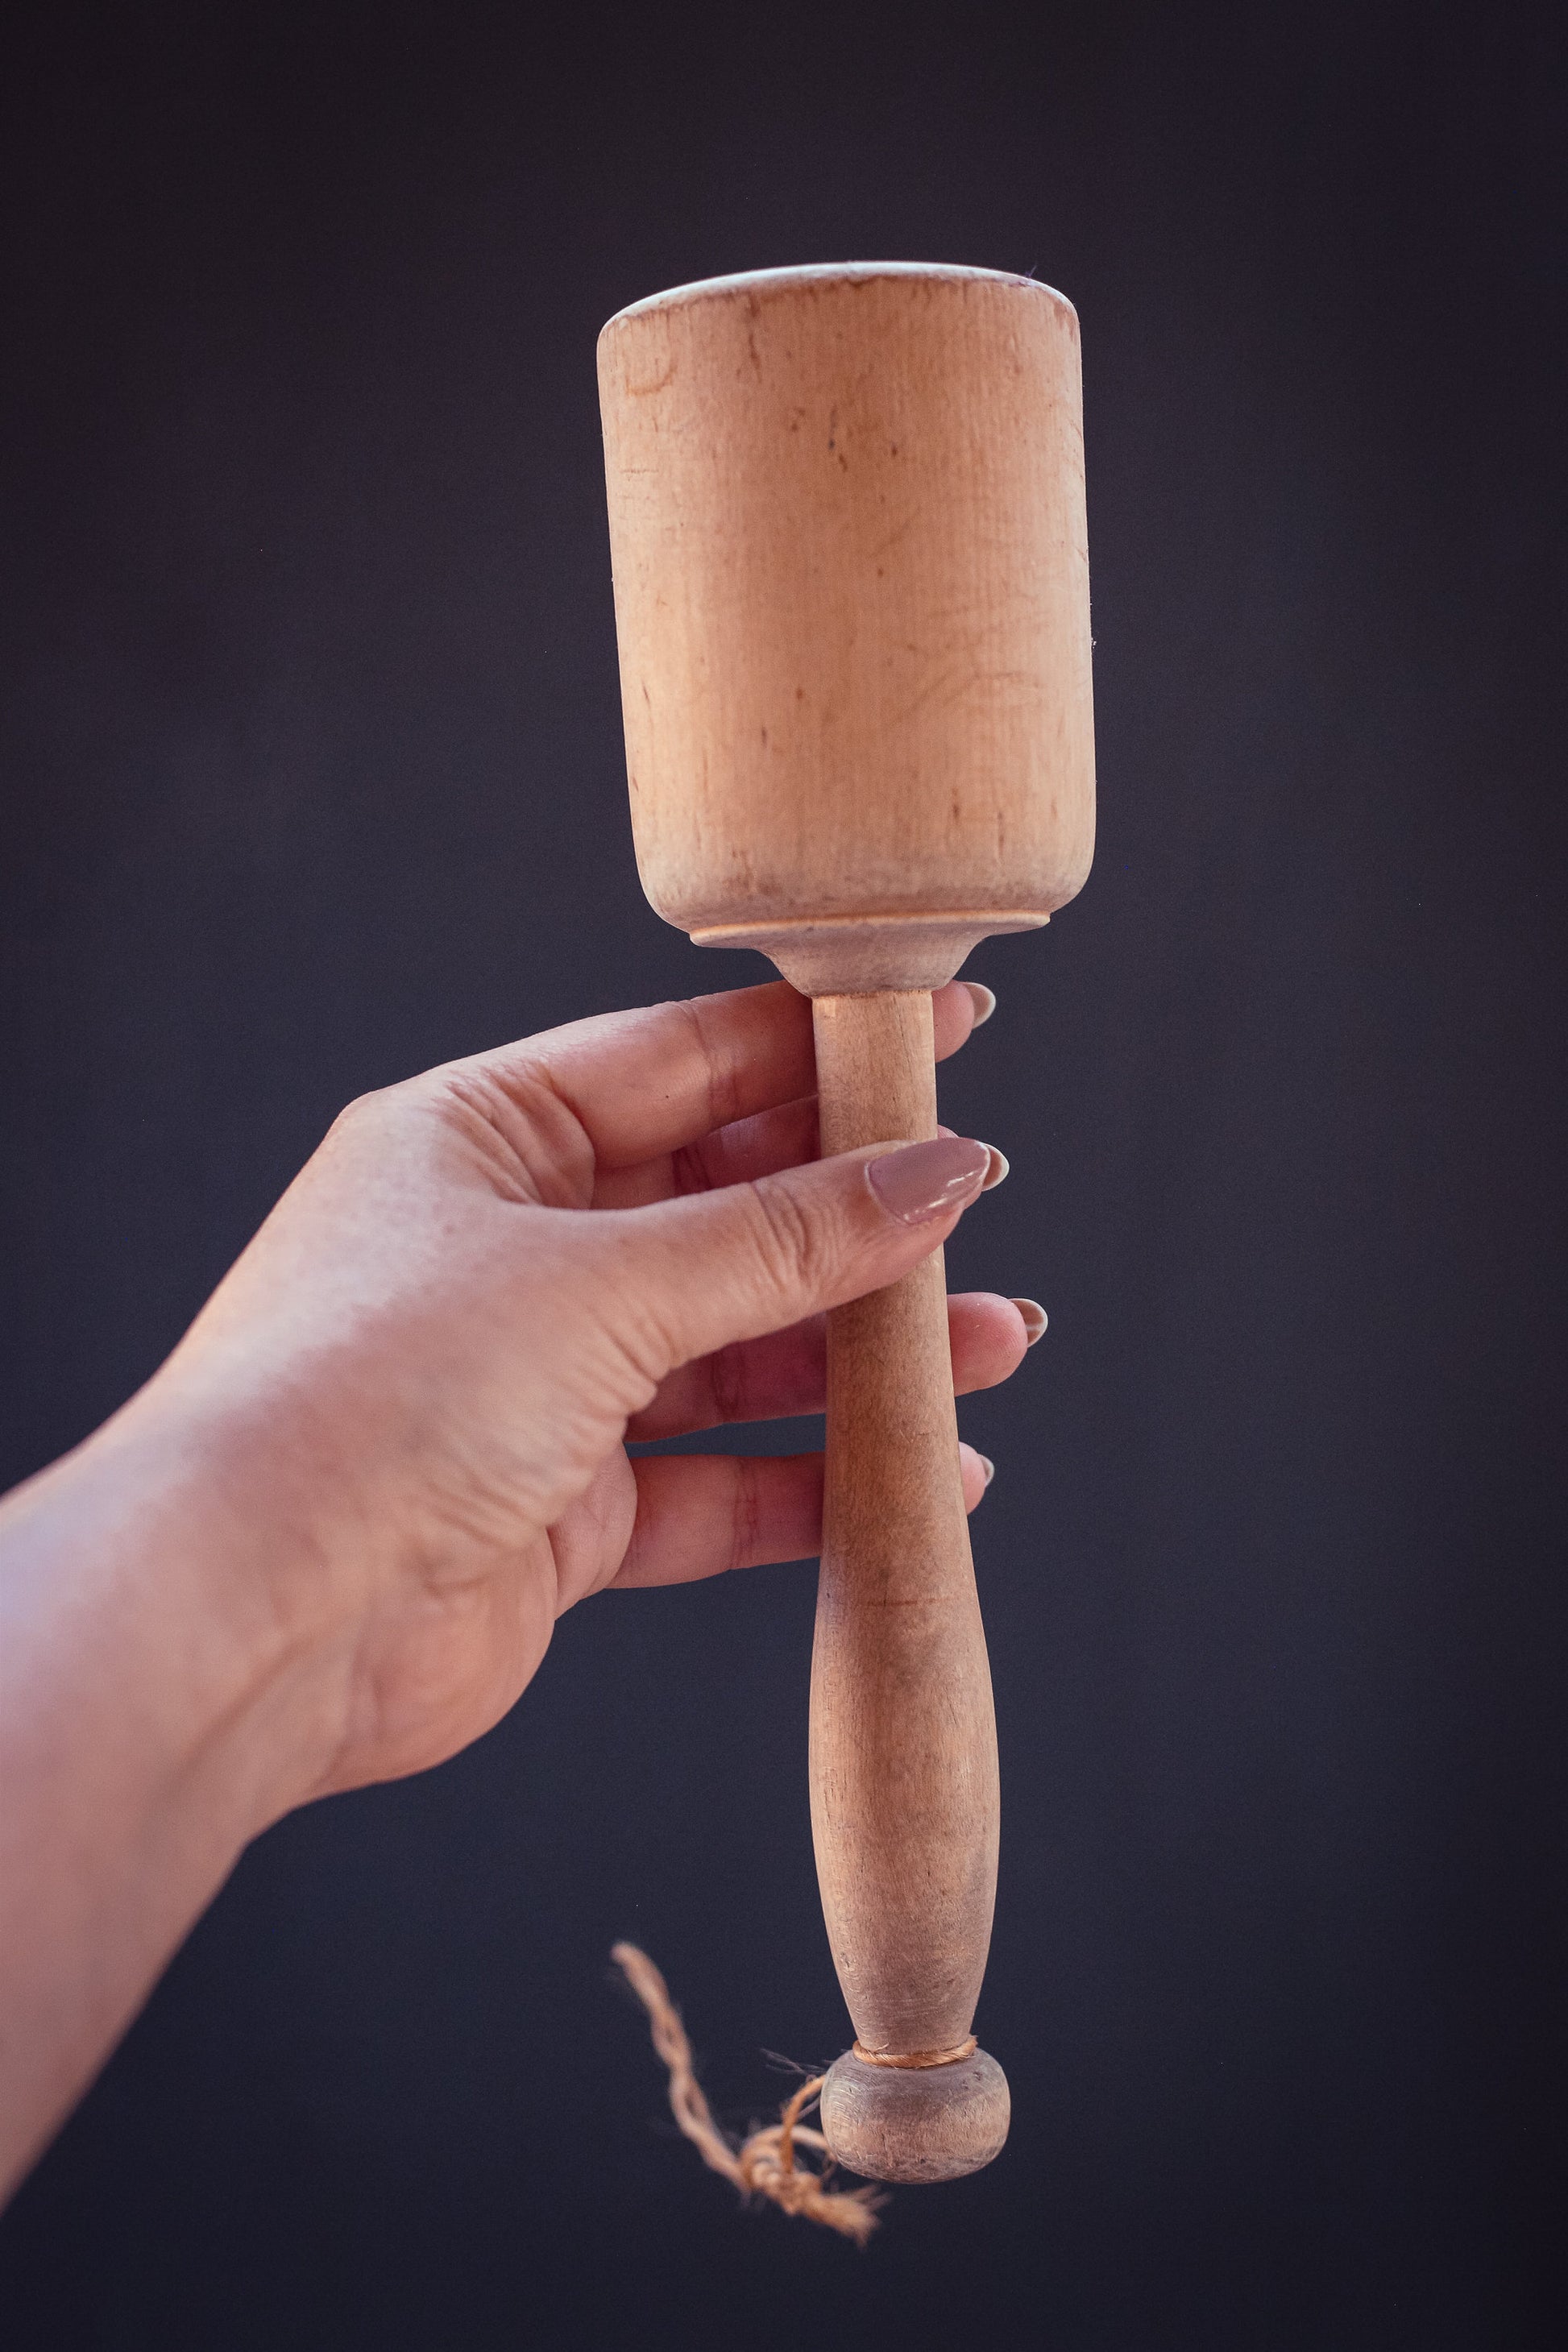 Vintage Wood Potato Masher - Hand Carved Wooden Masher